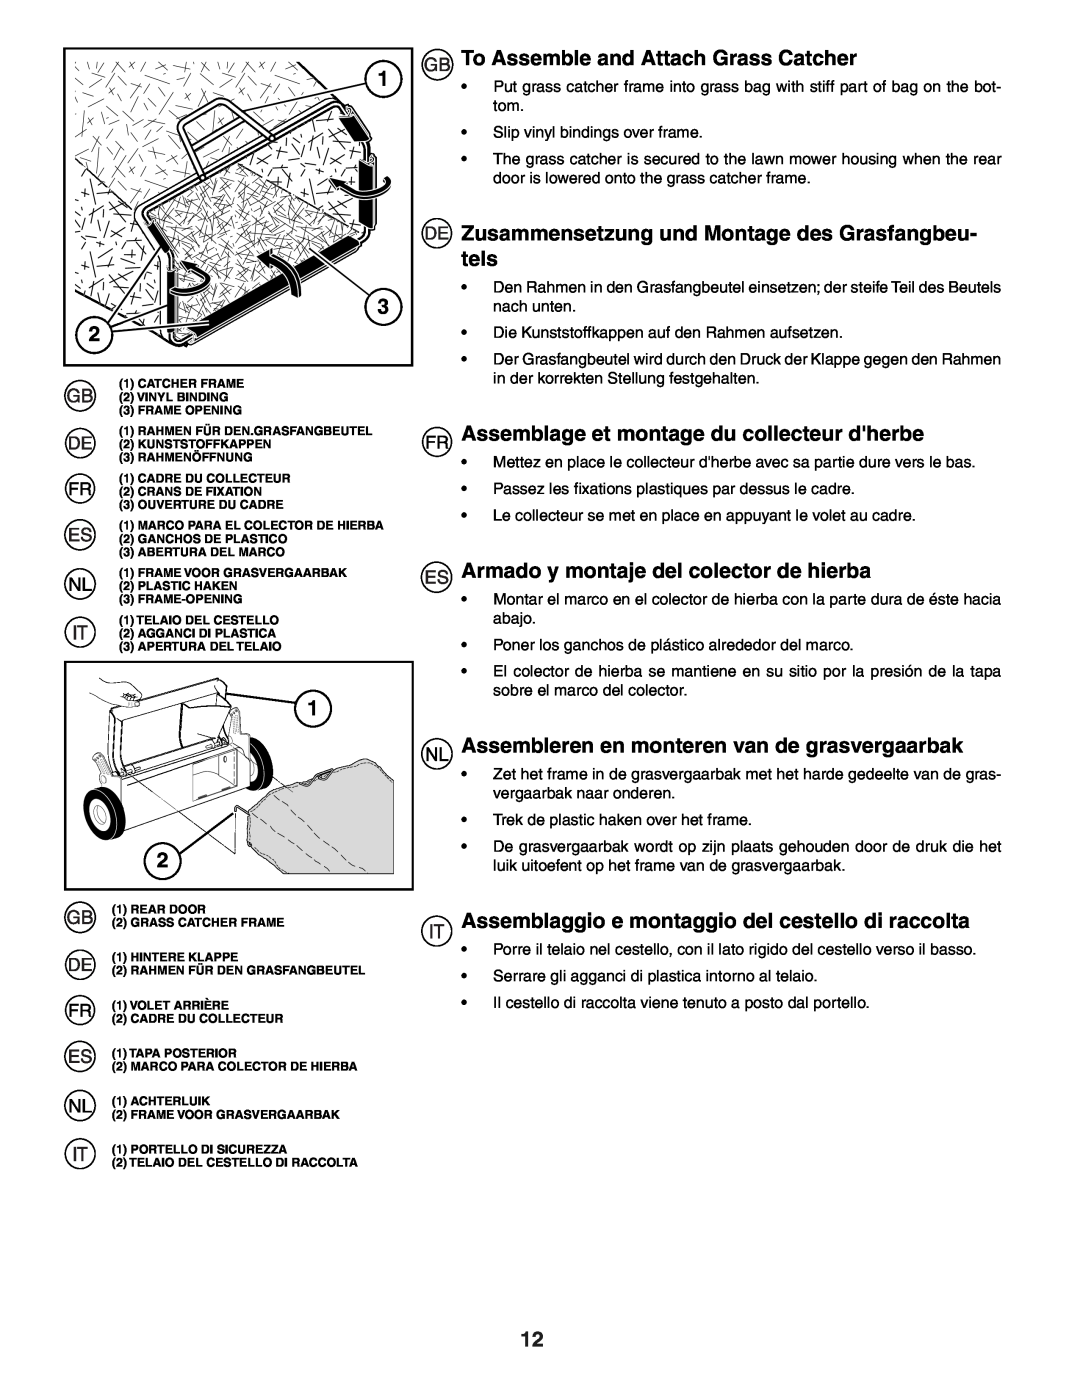 Husqvarna R53W instruction manual To Assemble and Attach Grass Catcher, Zusammensetzung und Montage des Grasfangbeu- tels 